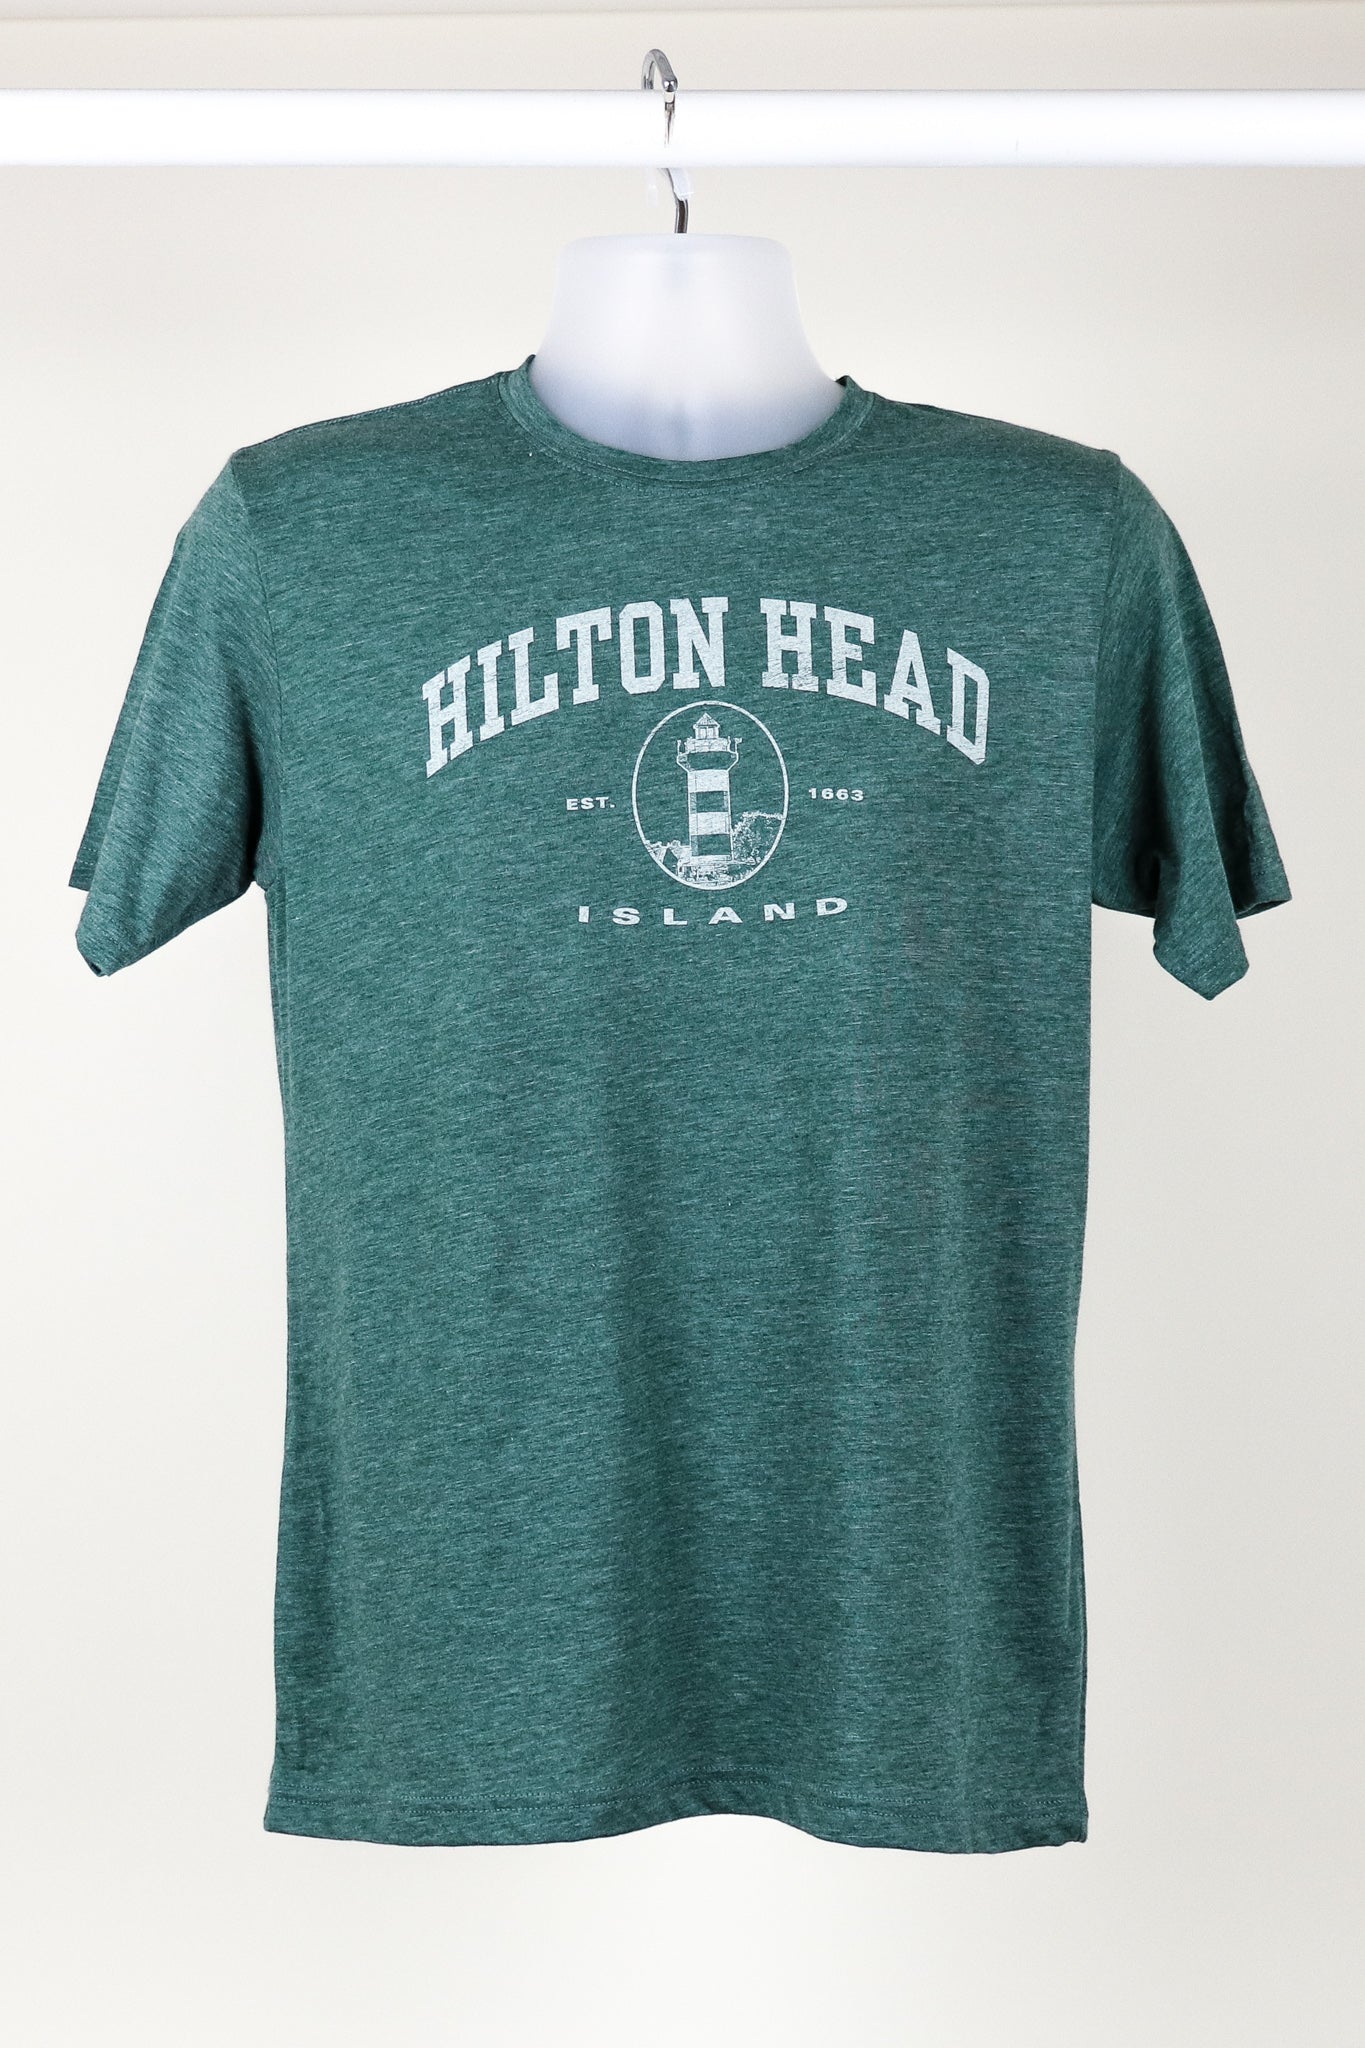 Vintage Hilton Head Lighthouse T-Shirt